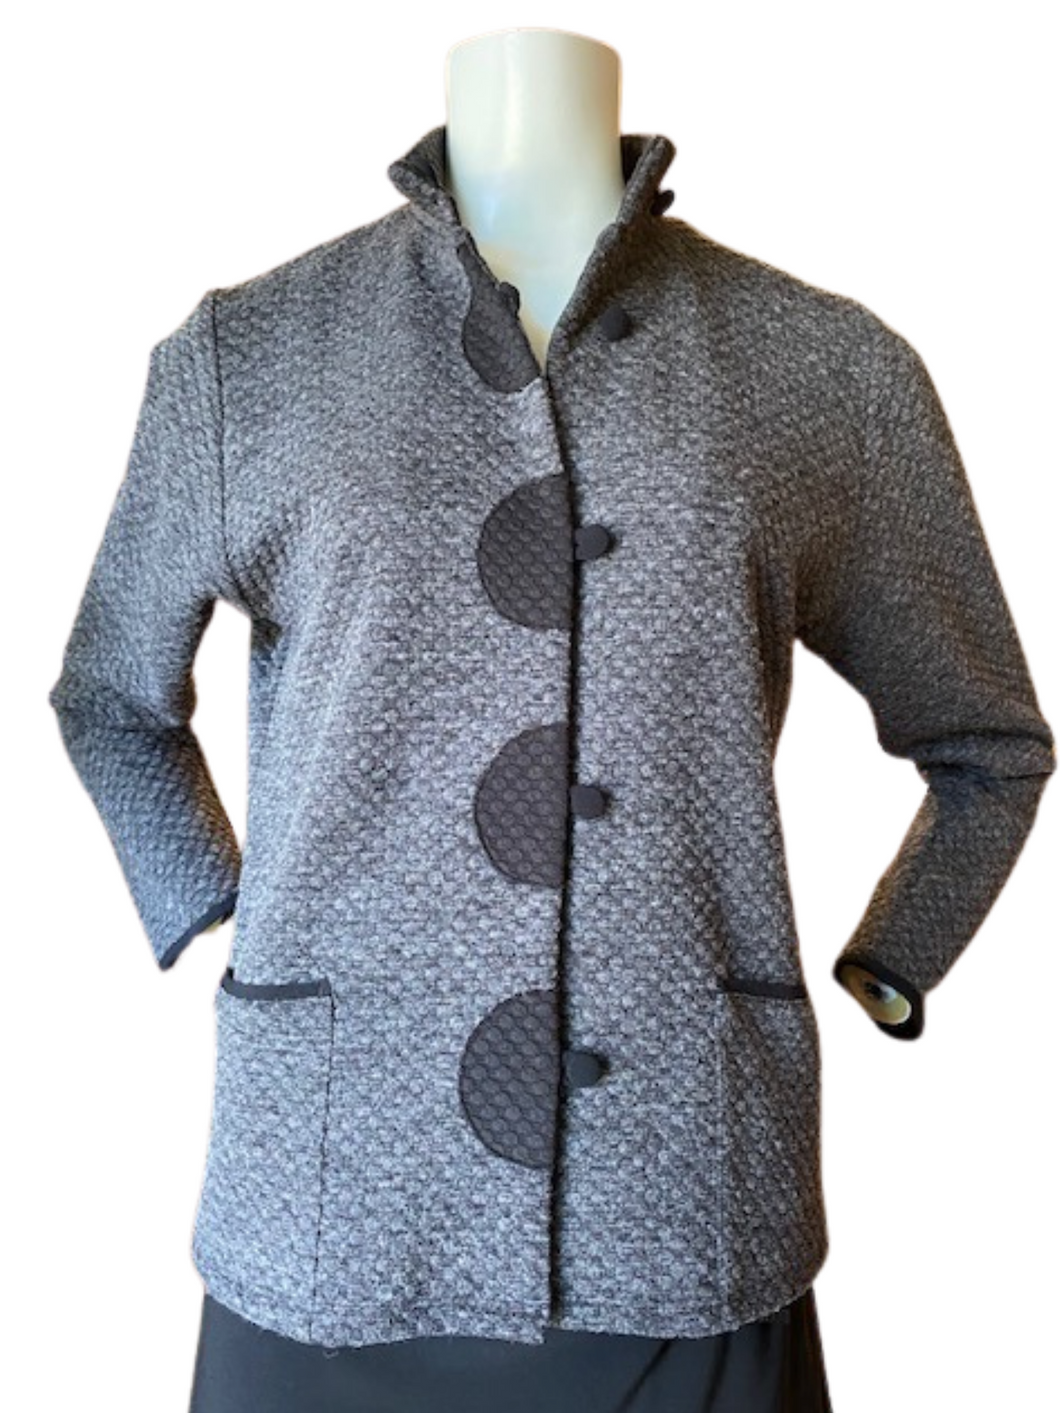 Style 151 Textured Grey Knit Cardigan